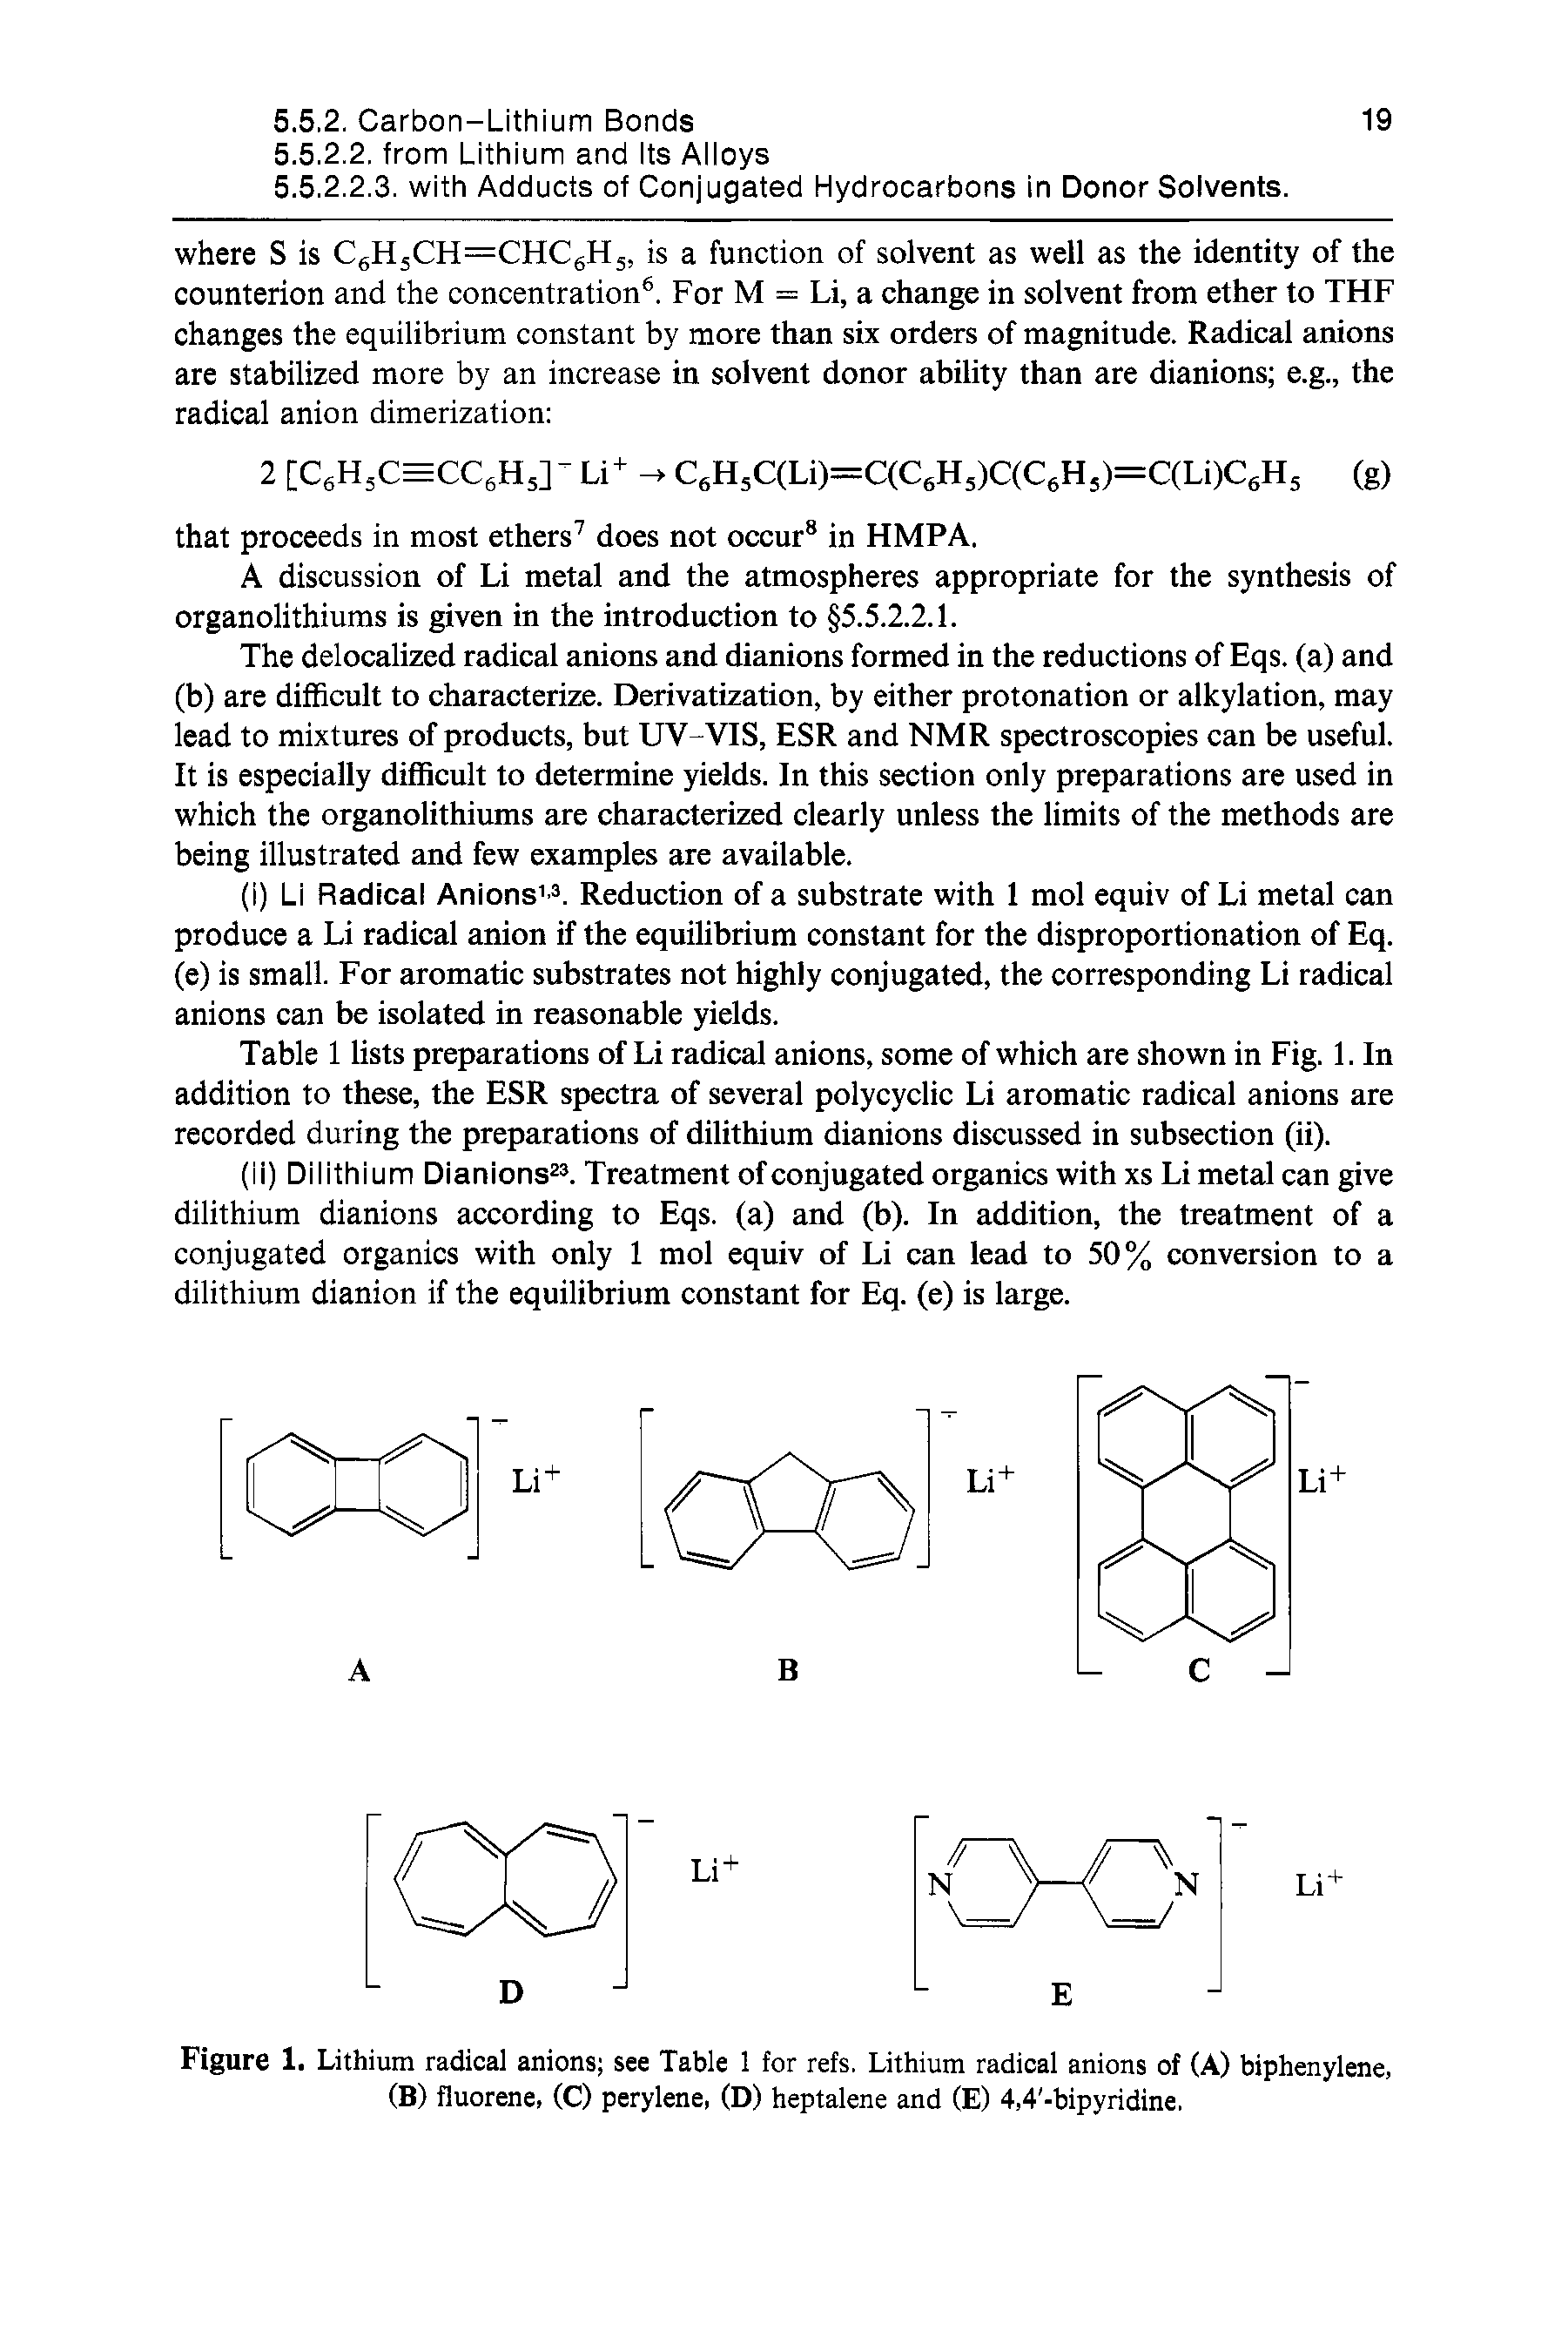 Figure 1. Lithium radical anions see Table 1 for refs. Lithium radical anions of (A) biphenylene, (B) fluorene, (C) perylene, (D) heptalene and (E) 4,4 -bipyridine.